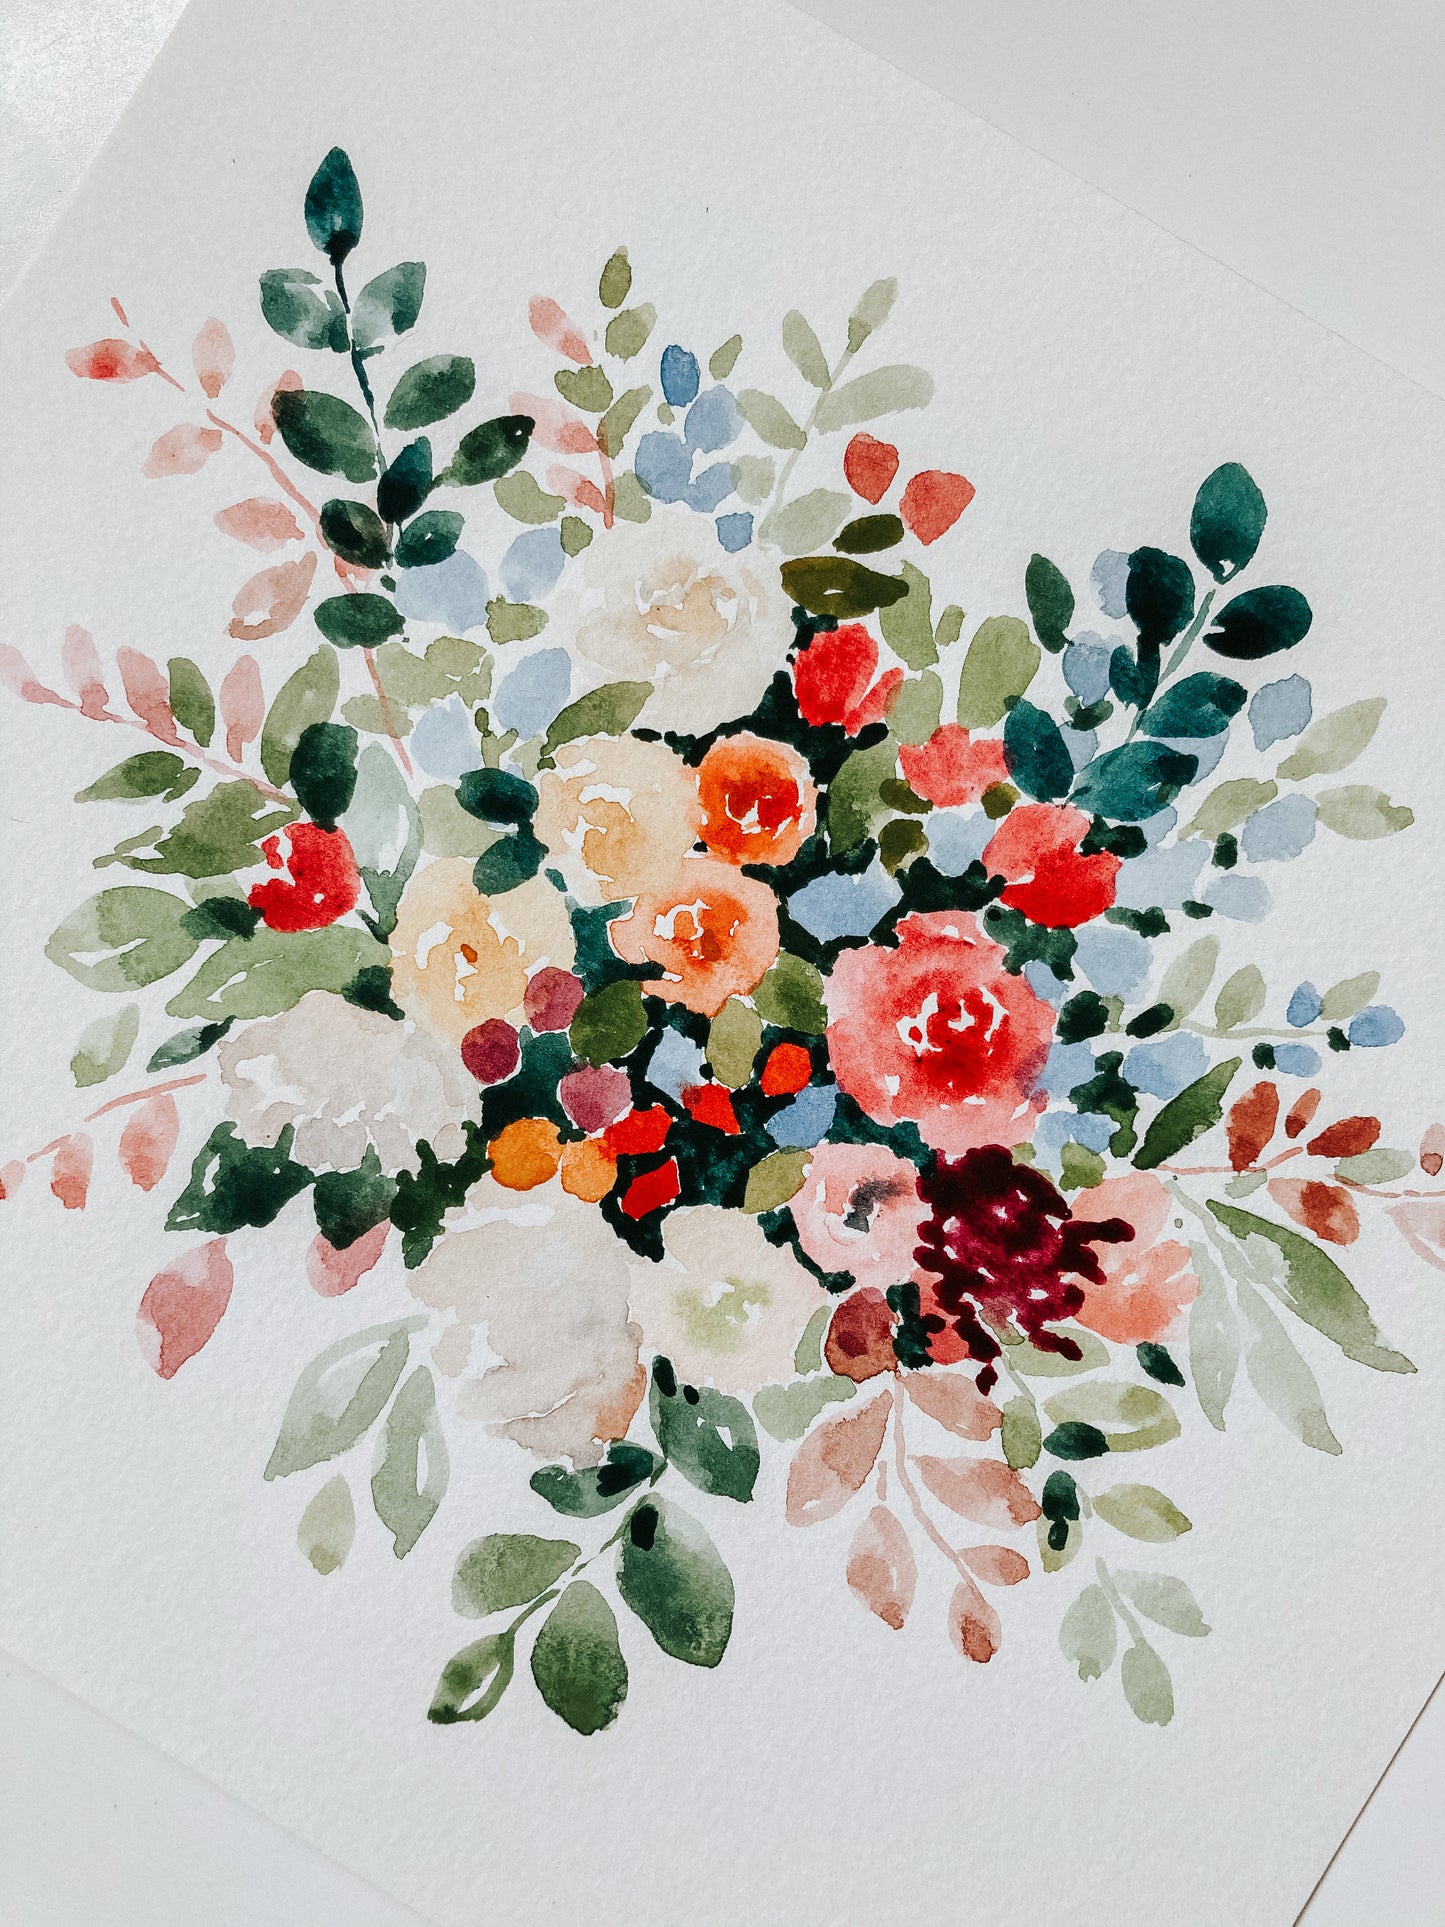 Loose Floral Watercolor Workshop Recording